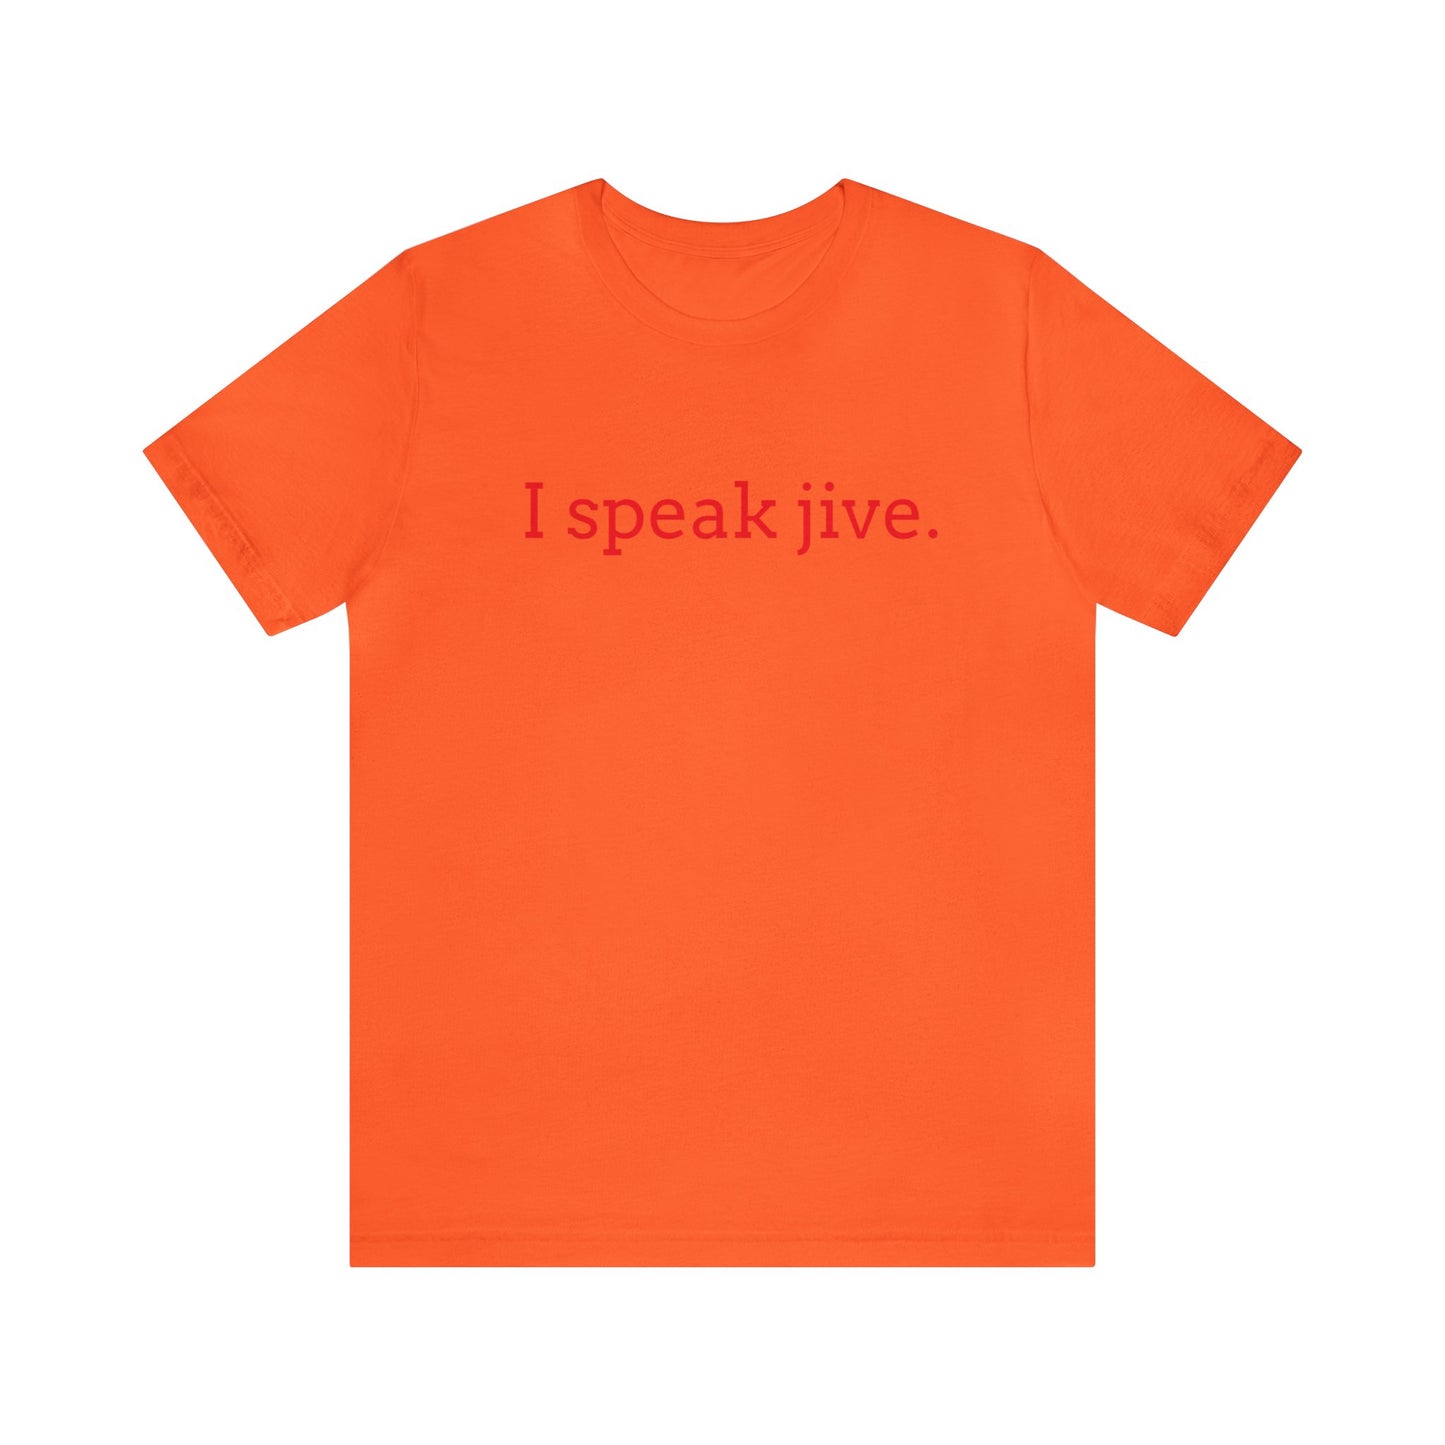 I speak jive.